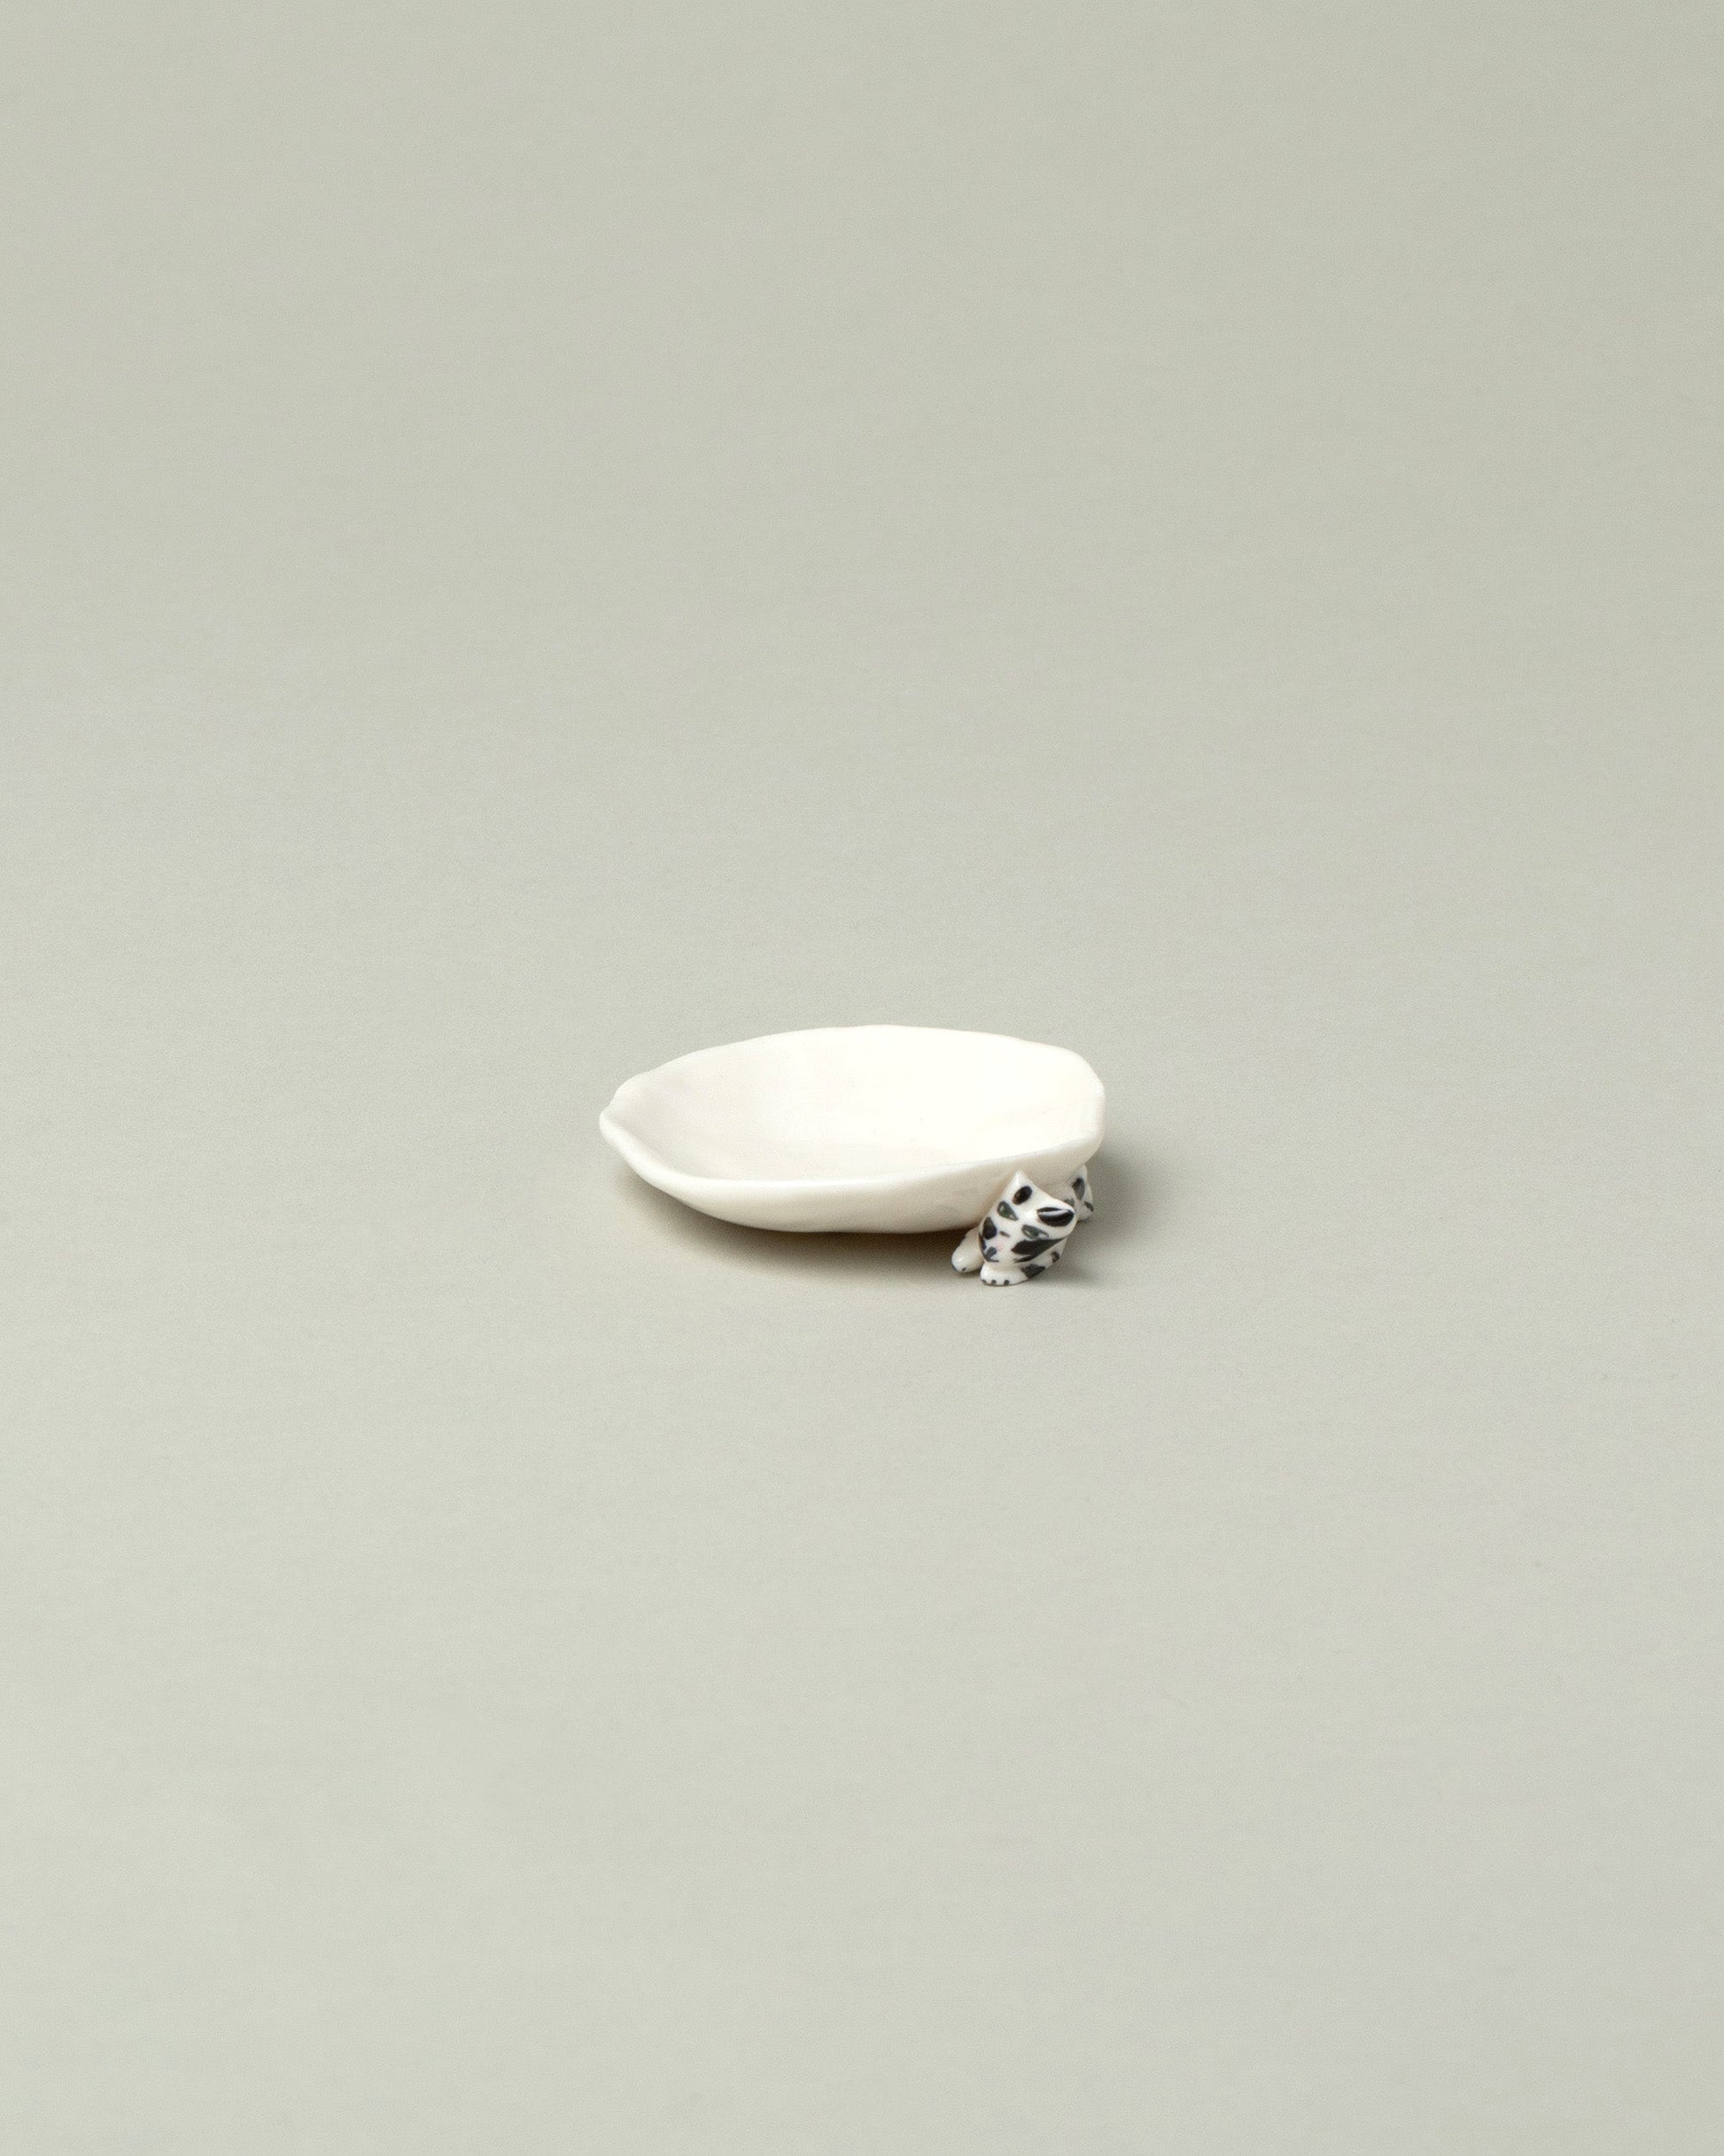 Eleonor Boström Black Spots Mini Cat Dish on light color background.